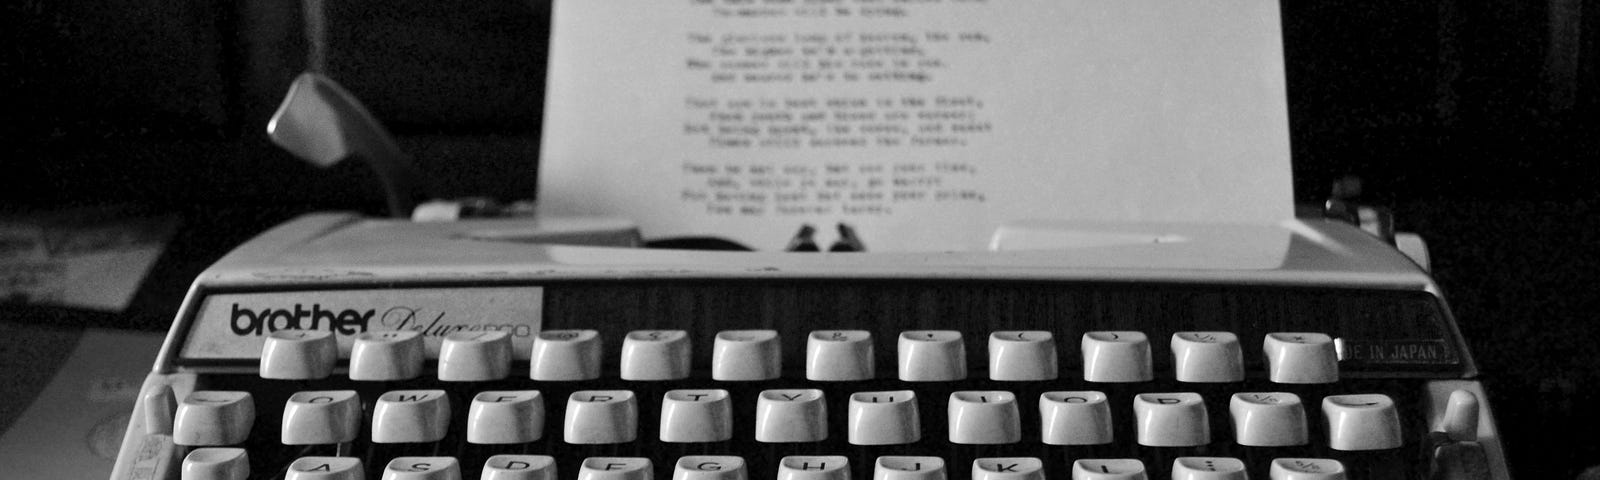 Typewriter with paper